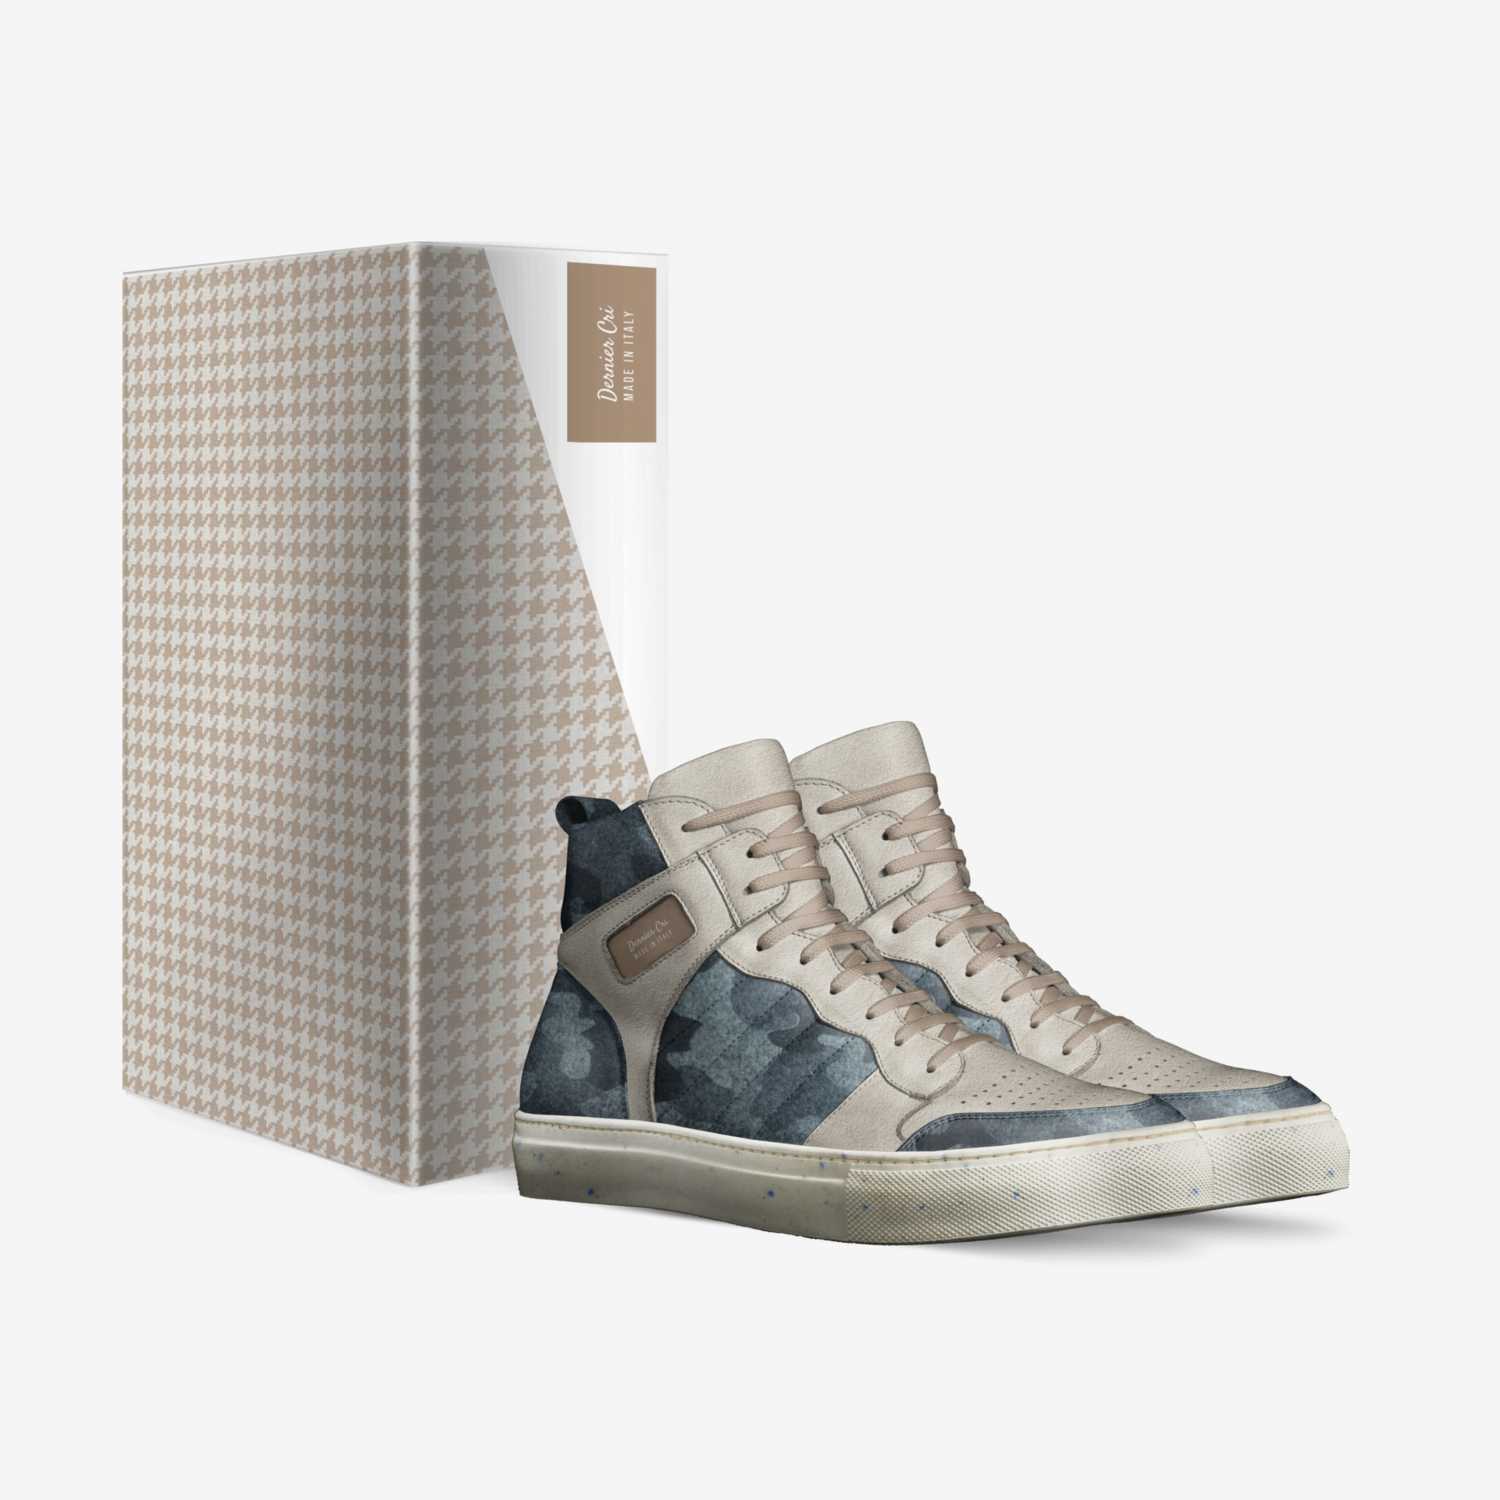 Dernier Cri custom made in Italy shoes by Te White | Box view